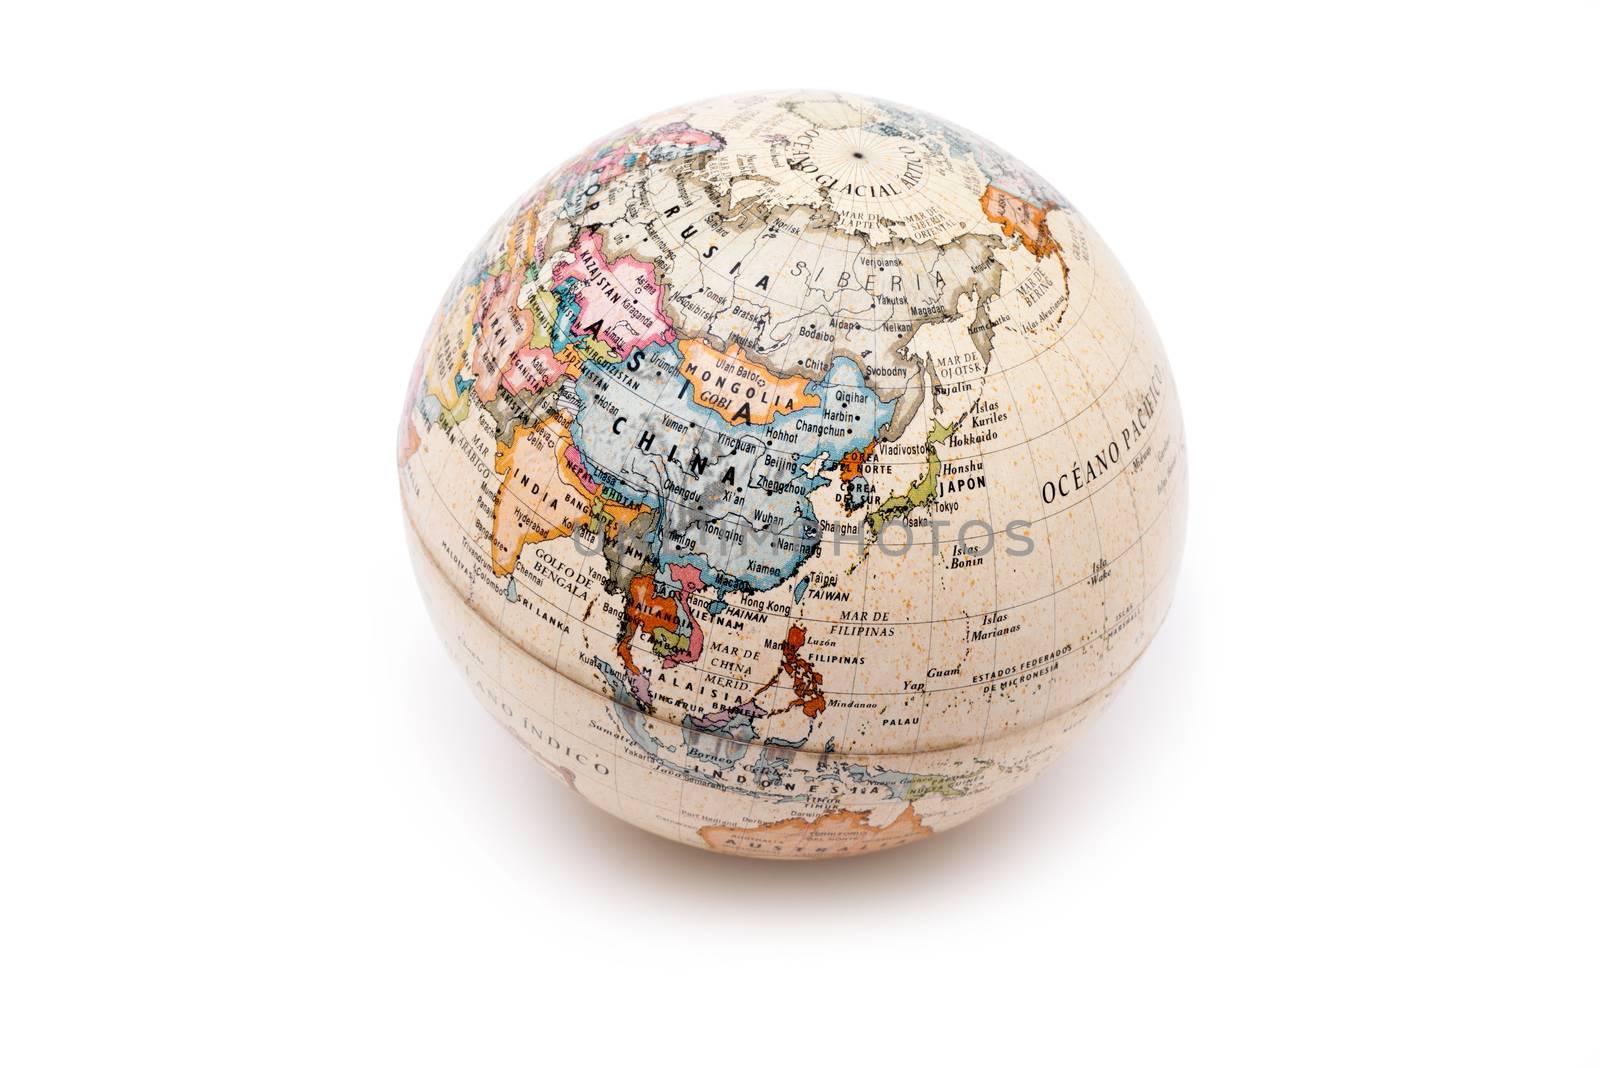 Part of a globe by Portokalis